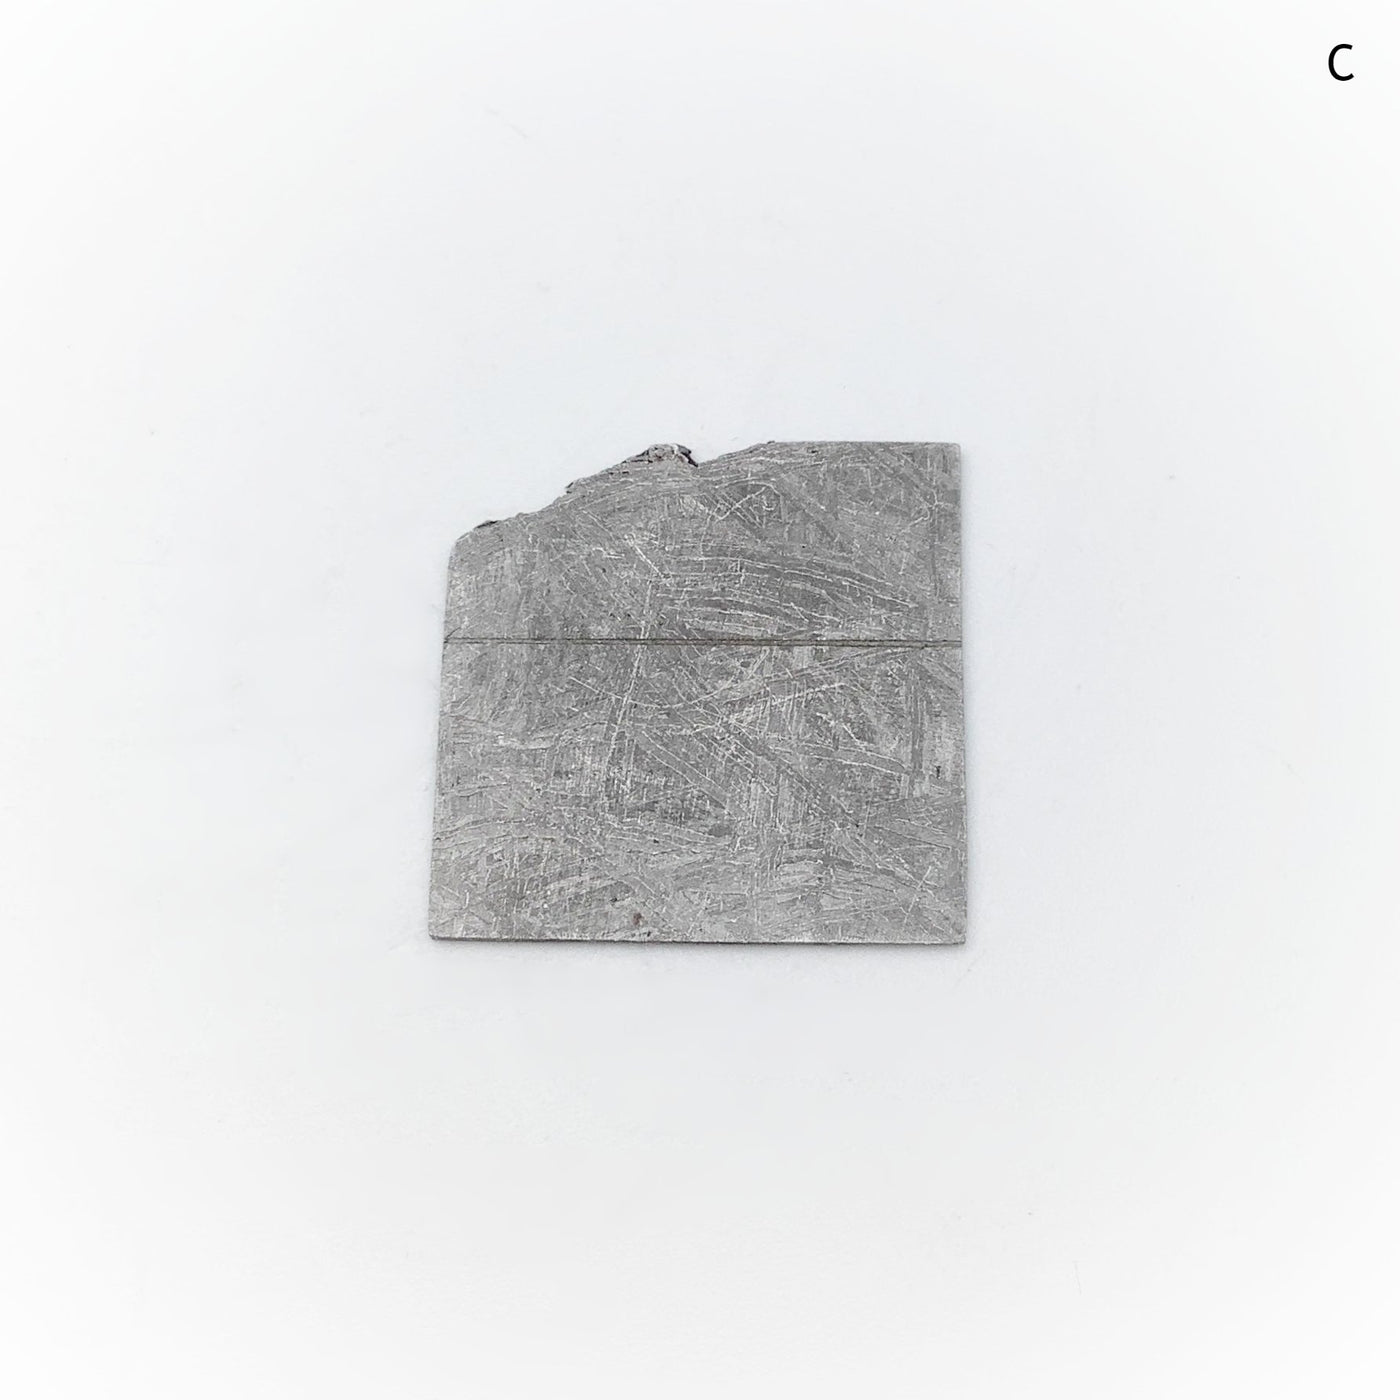 Muonionalusta Meteorite Slice at $115 Each